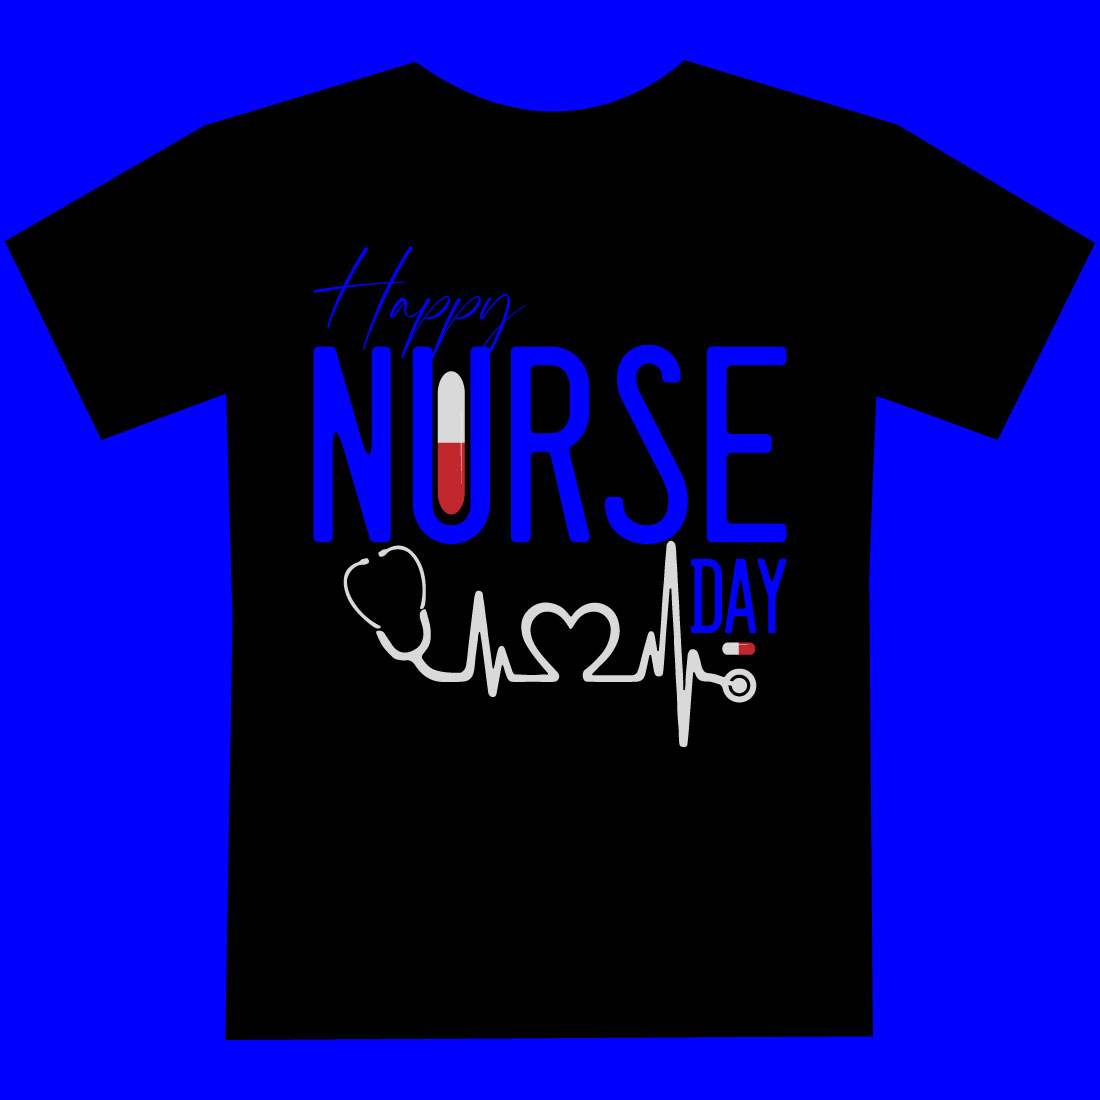 Happy Nurse day T shirt design cover image.